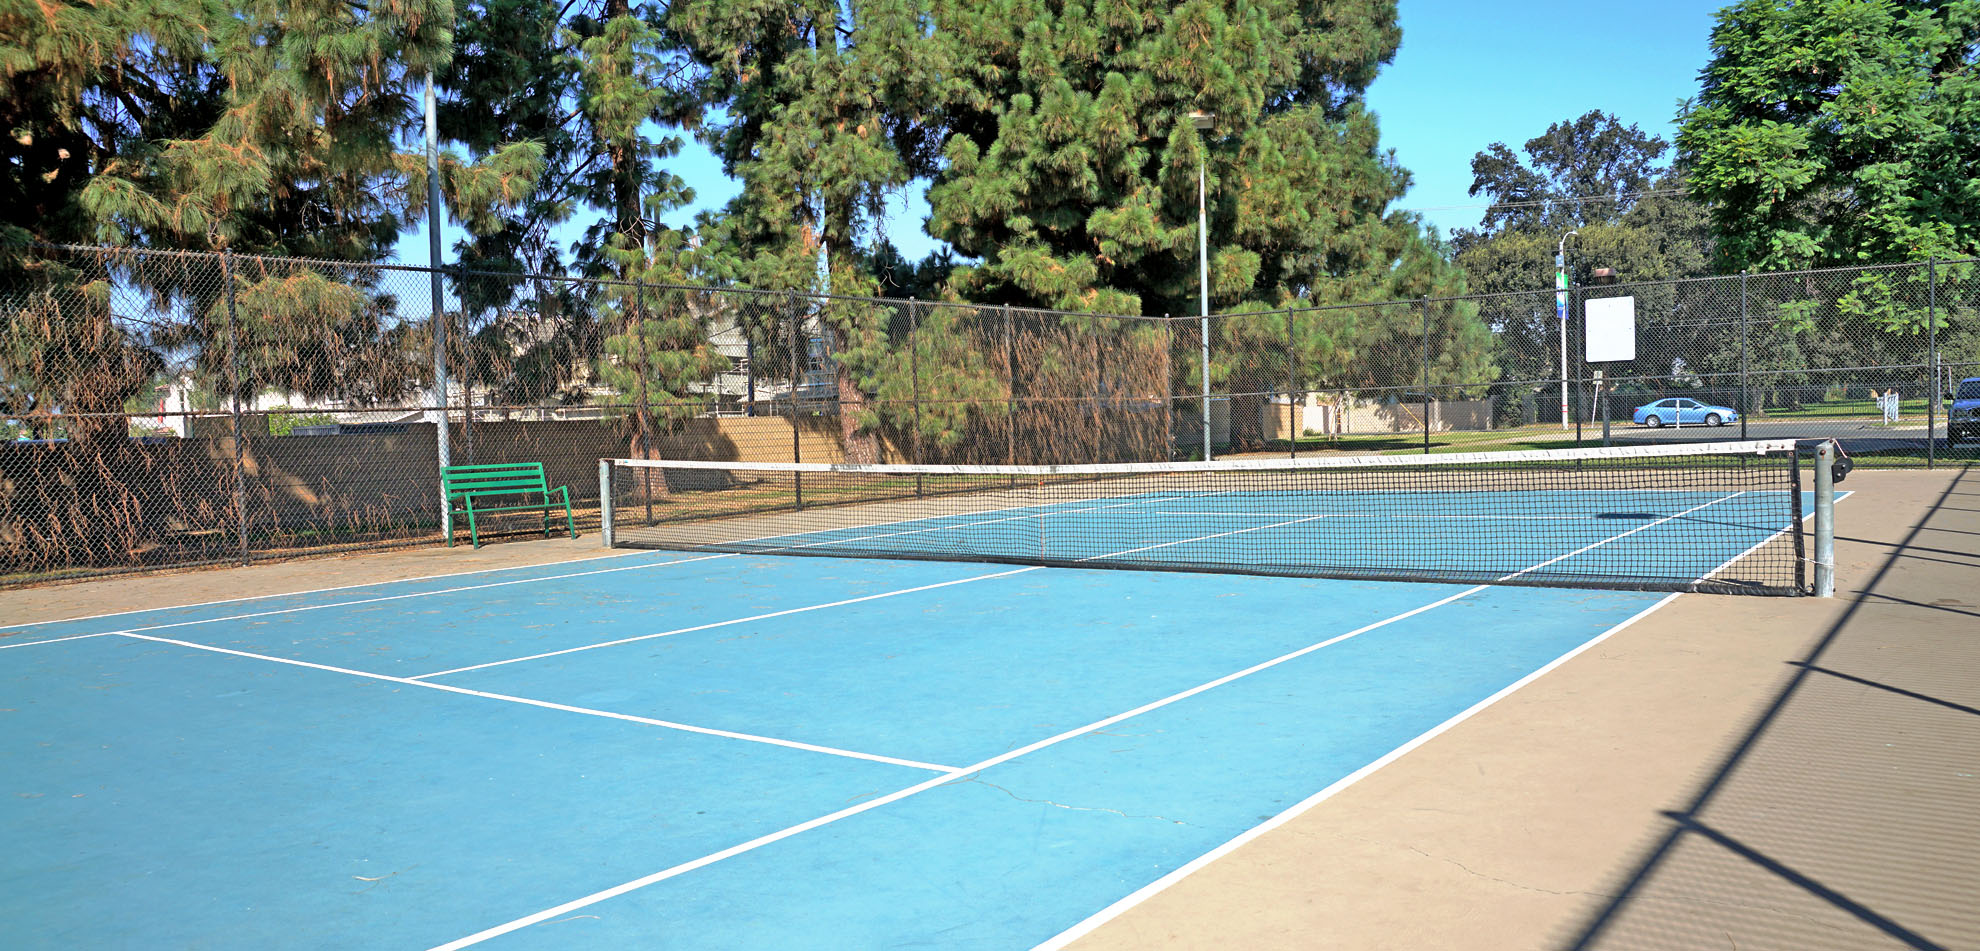 tennis court at Portola park